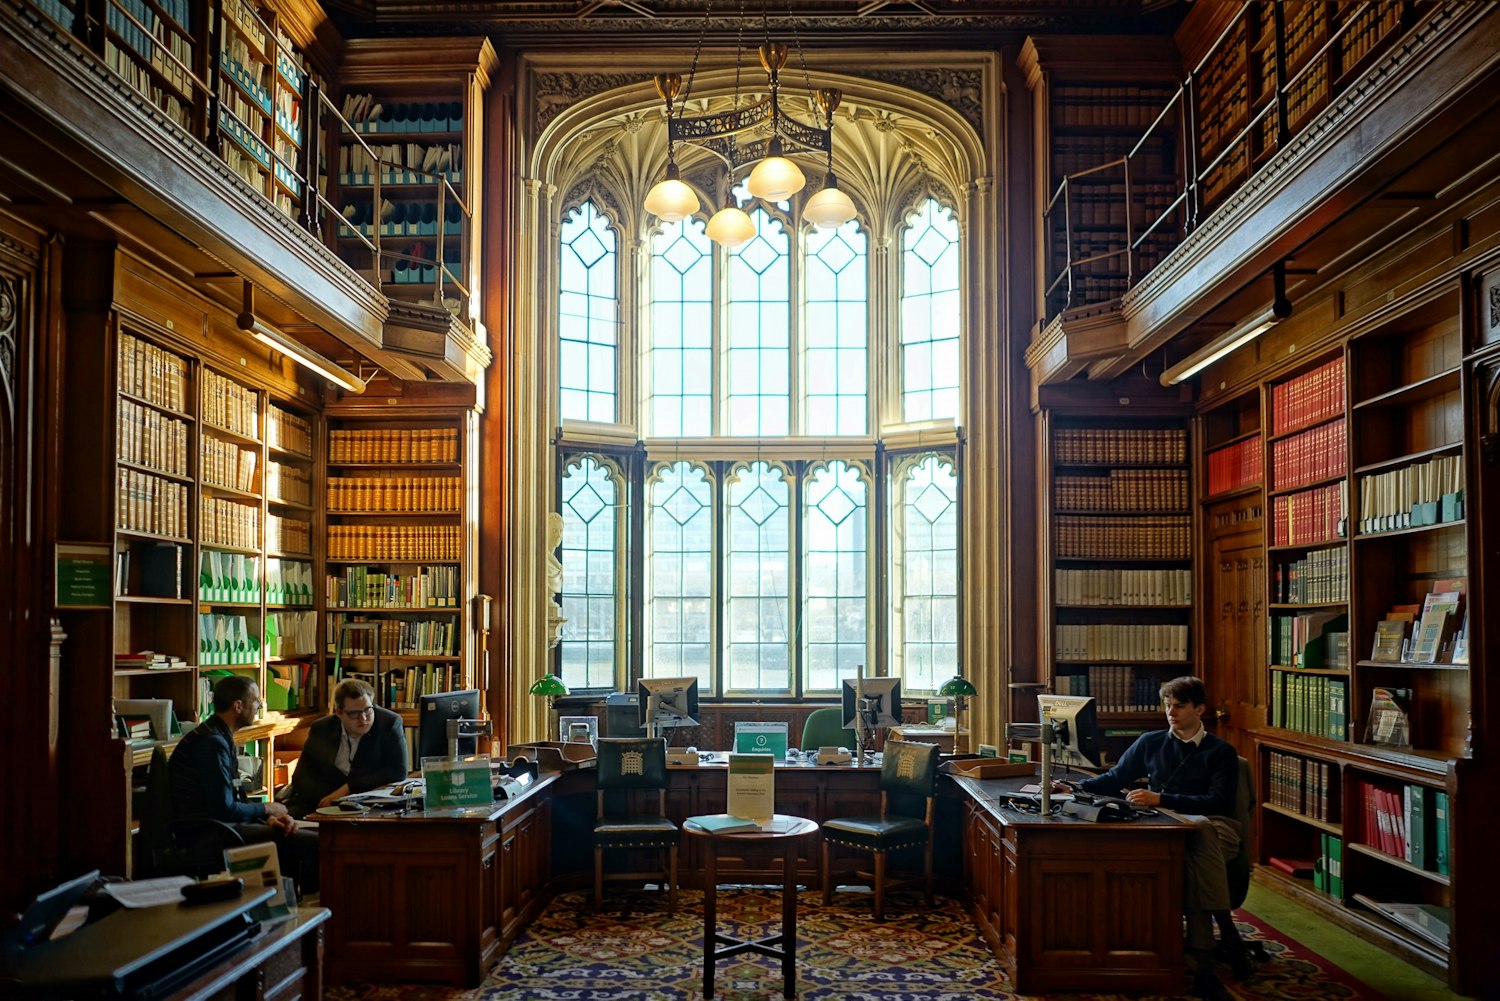 Common library. Библиотека Уэстминстер. The Houses of Parliament Library. Библиотека парламента Канады. Картинка Манчестерской библиотеки.